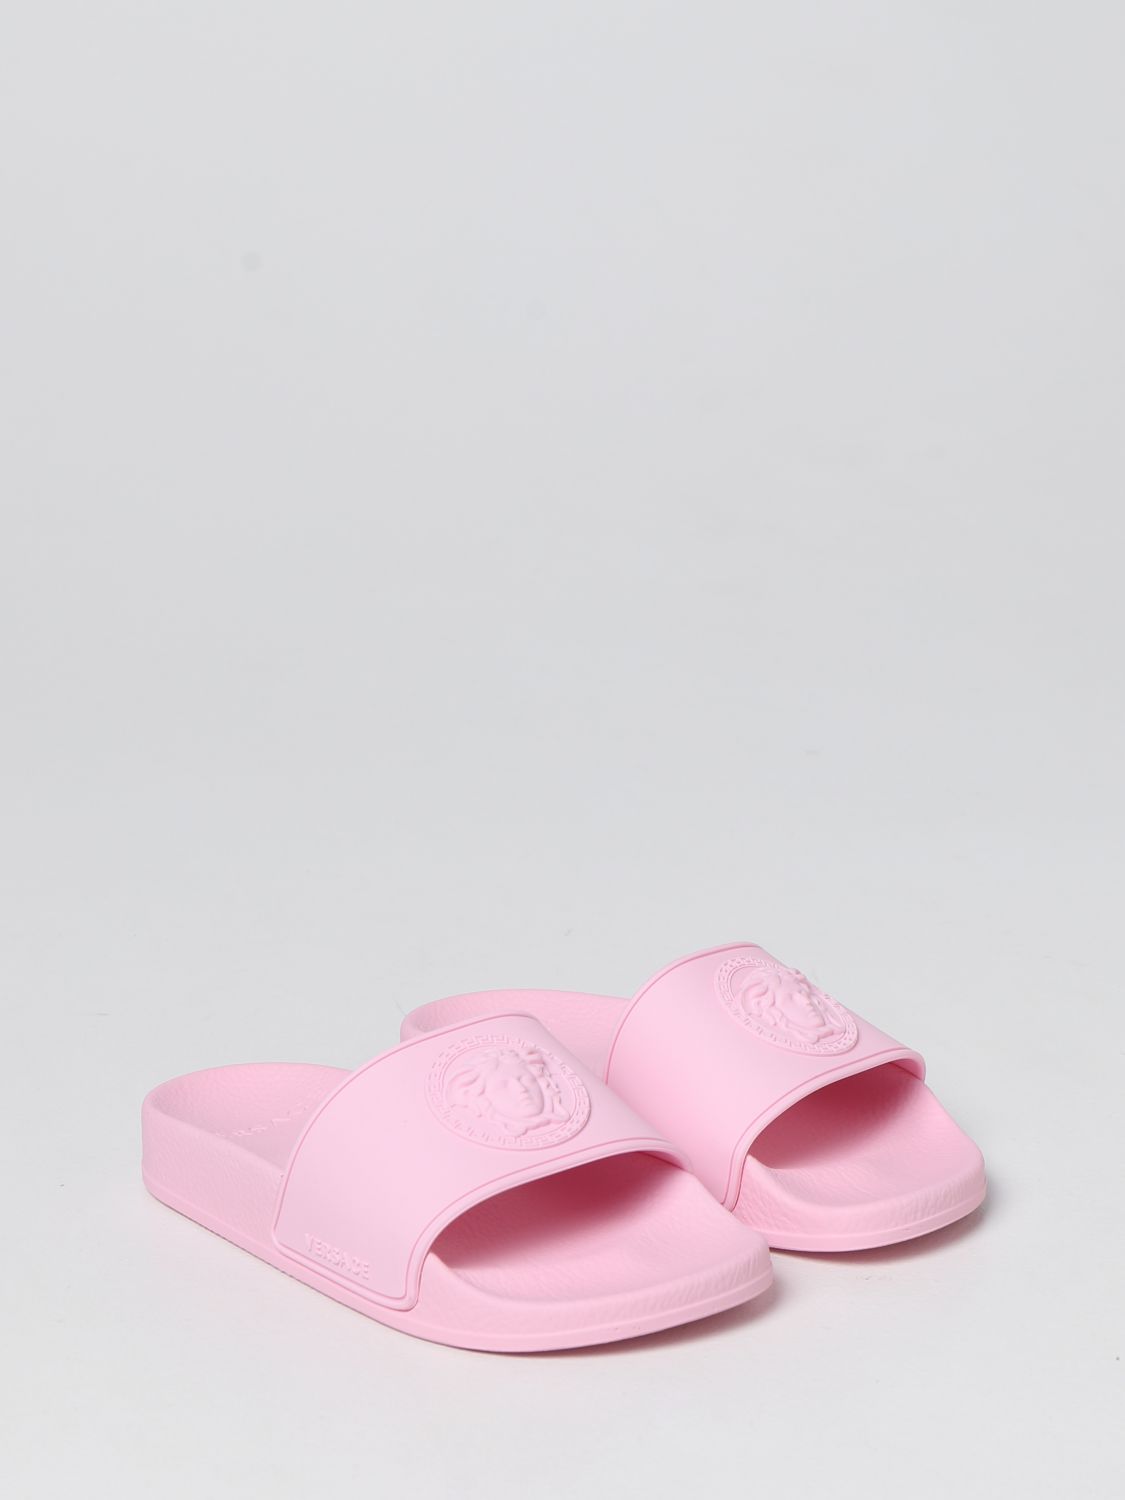 Schuhe Young Versace: Young Versace Jungen Schuhe baby pink 2